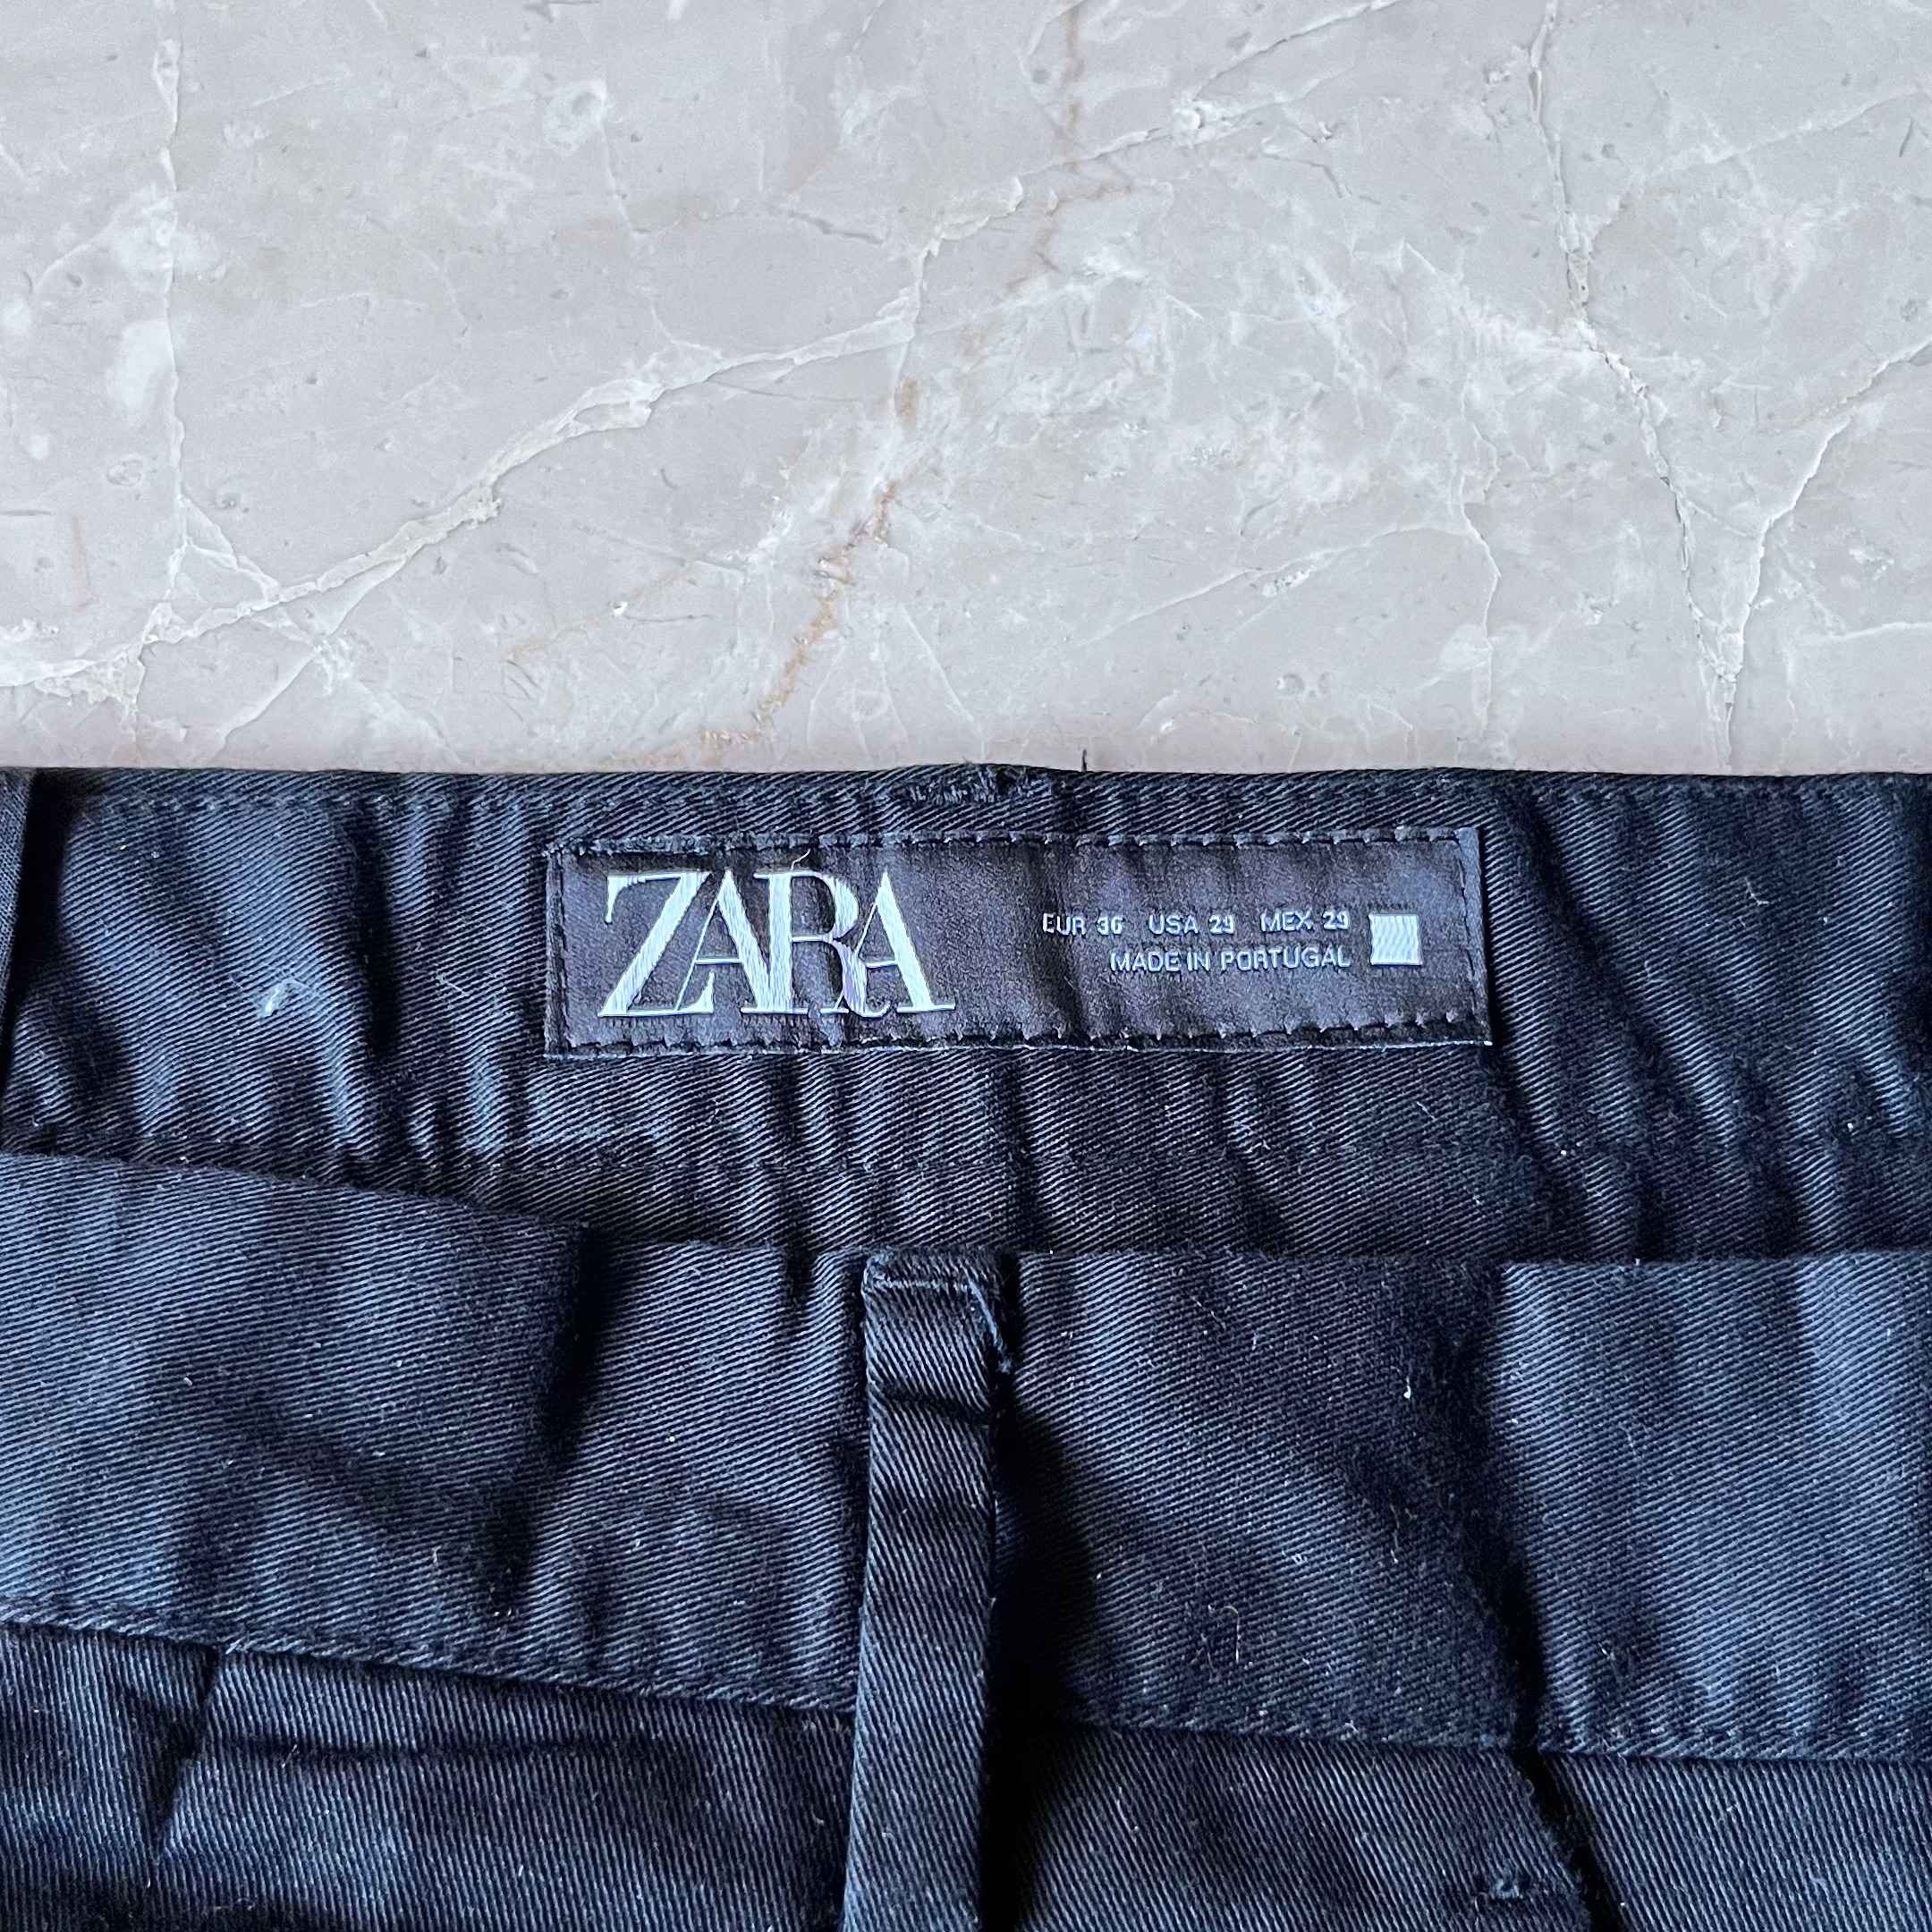 Zara Pants & Trousers for Men - prices in dubai | FASHIOLA UAE